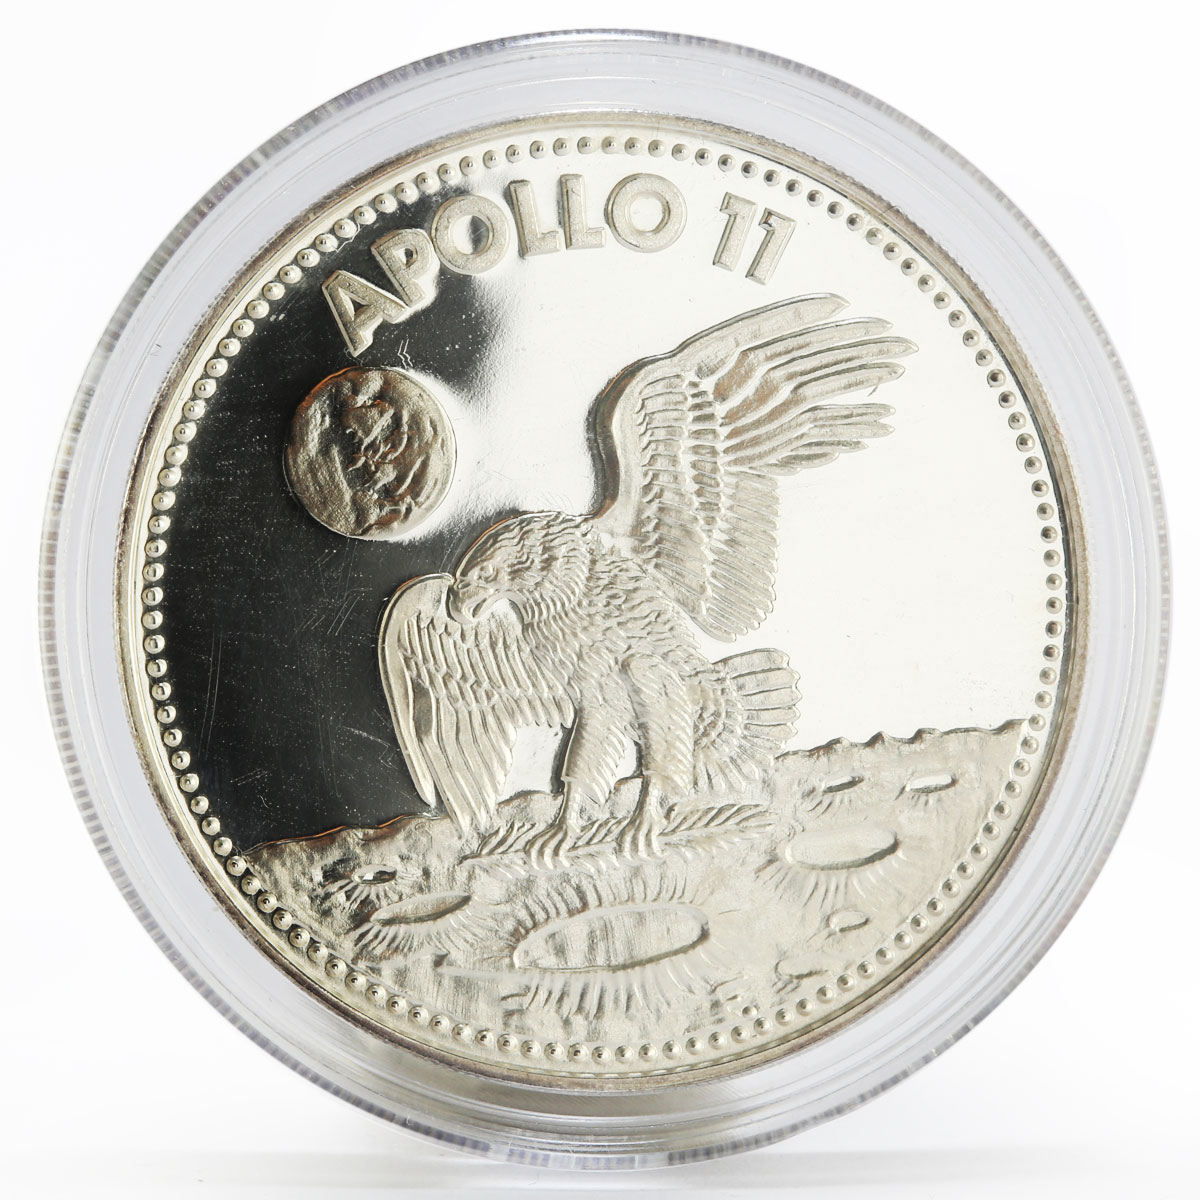 Paraguay 150 guaranies Apollo 11 Eagle landing Moon proof silver coin 1975